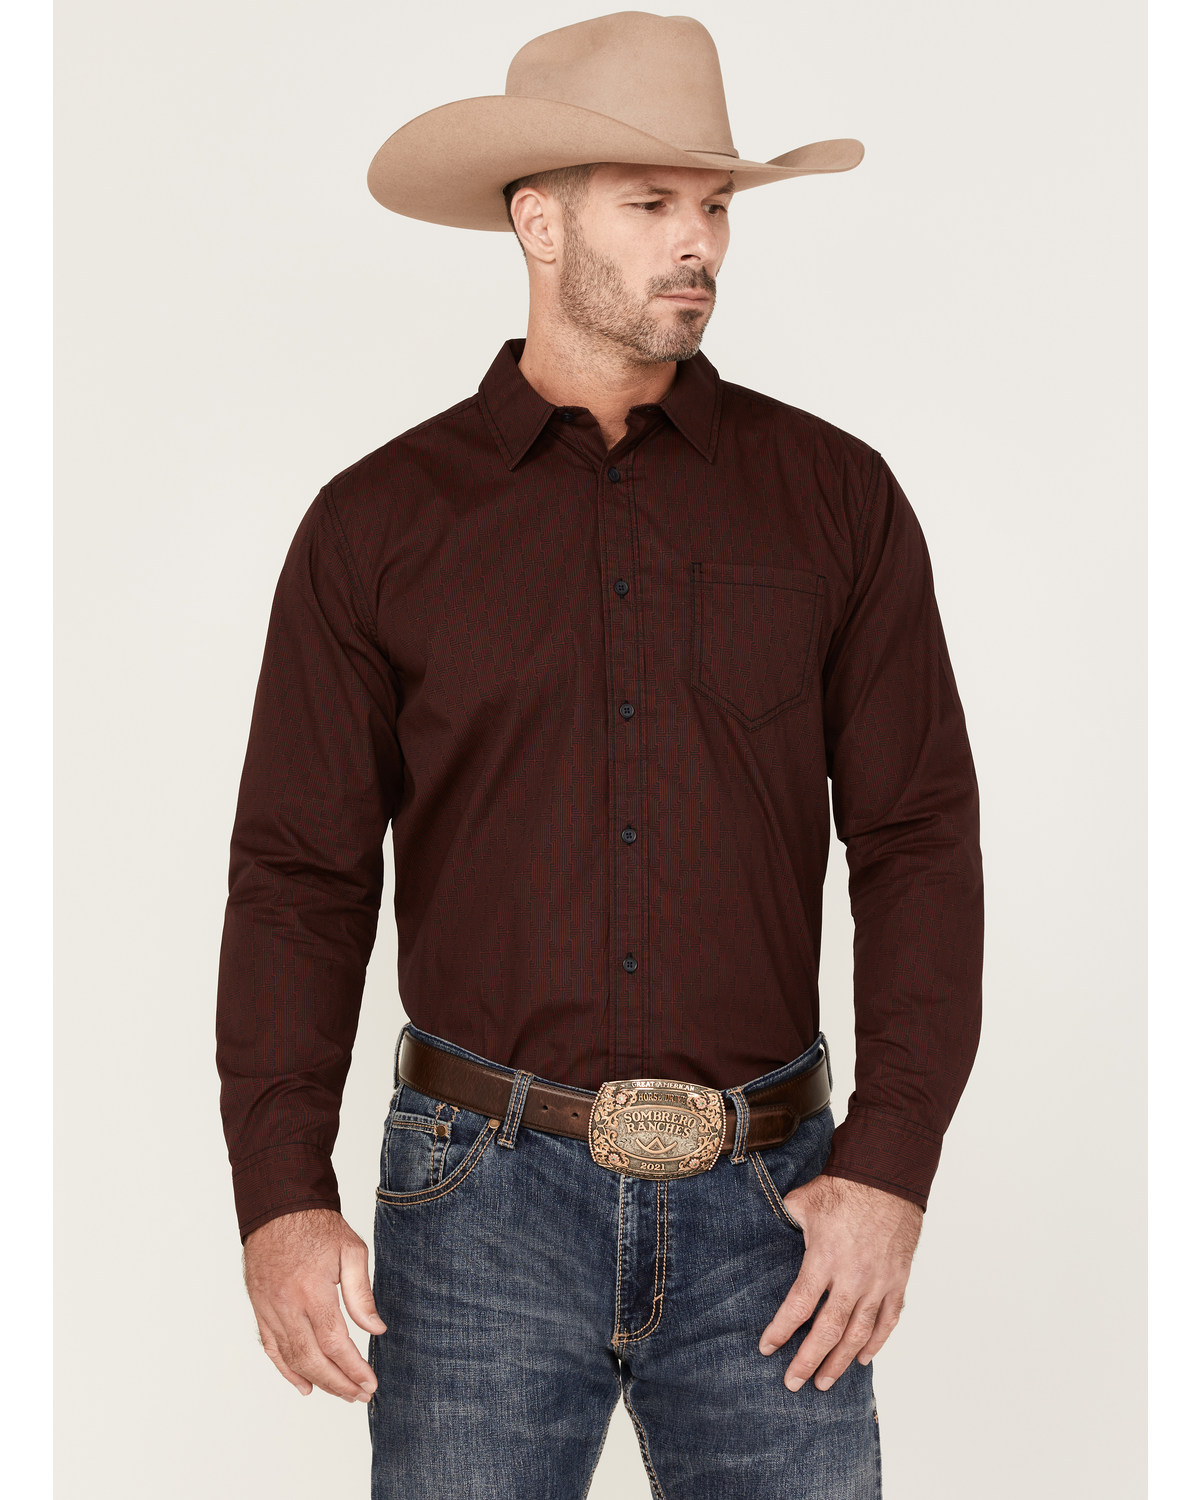 Gibson Men's Matrix Southwestern Geo Print Long Sleeve Button Down Western Shirt